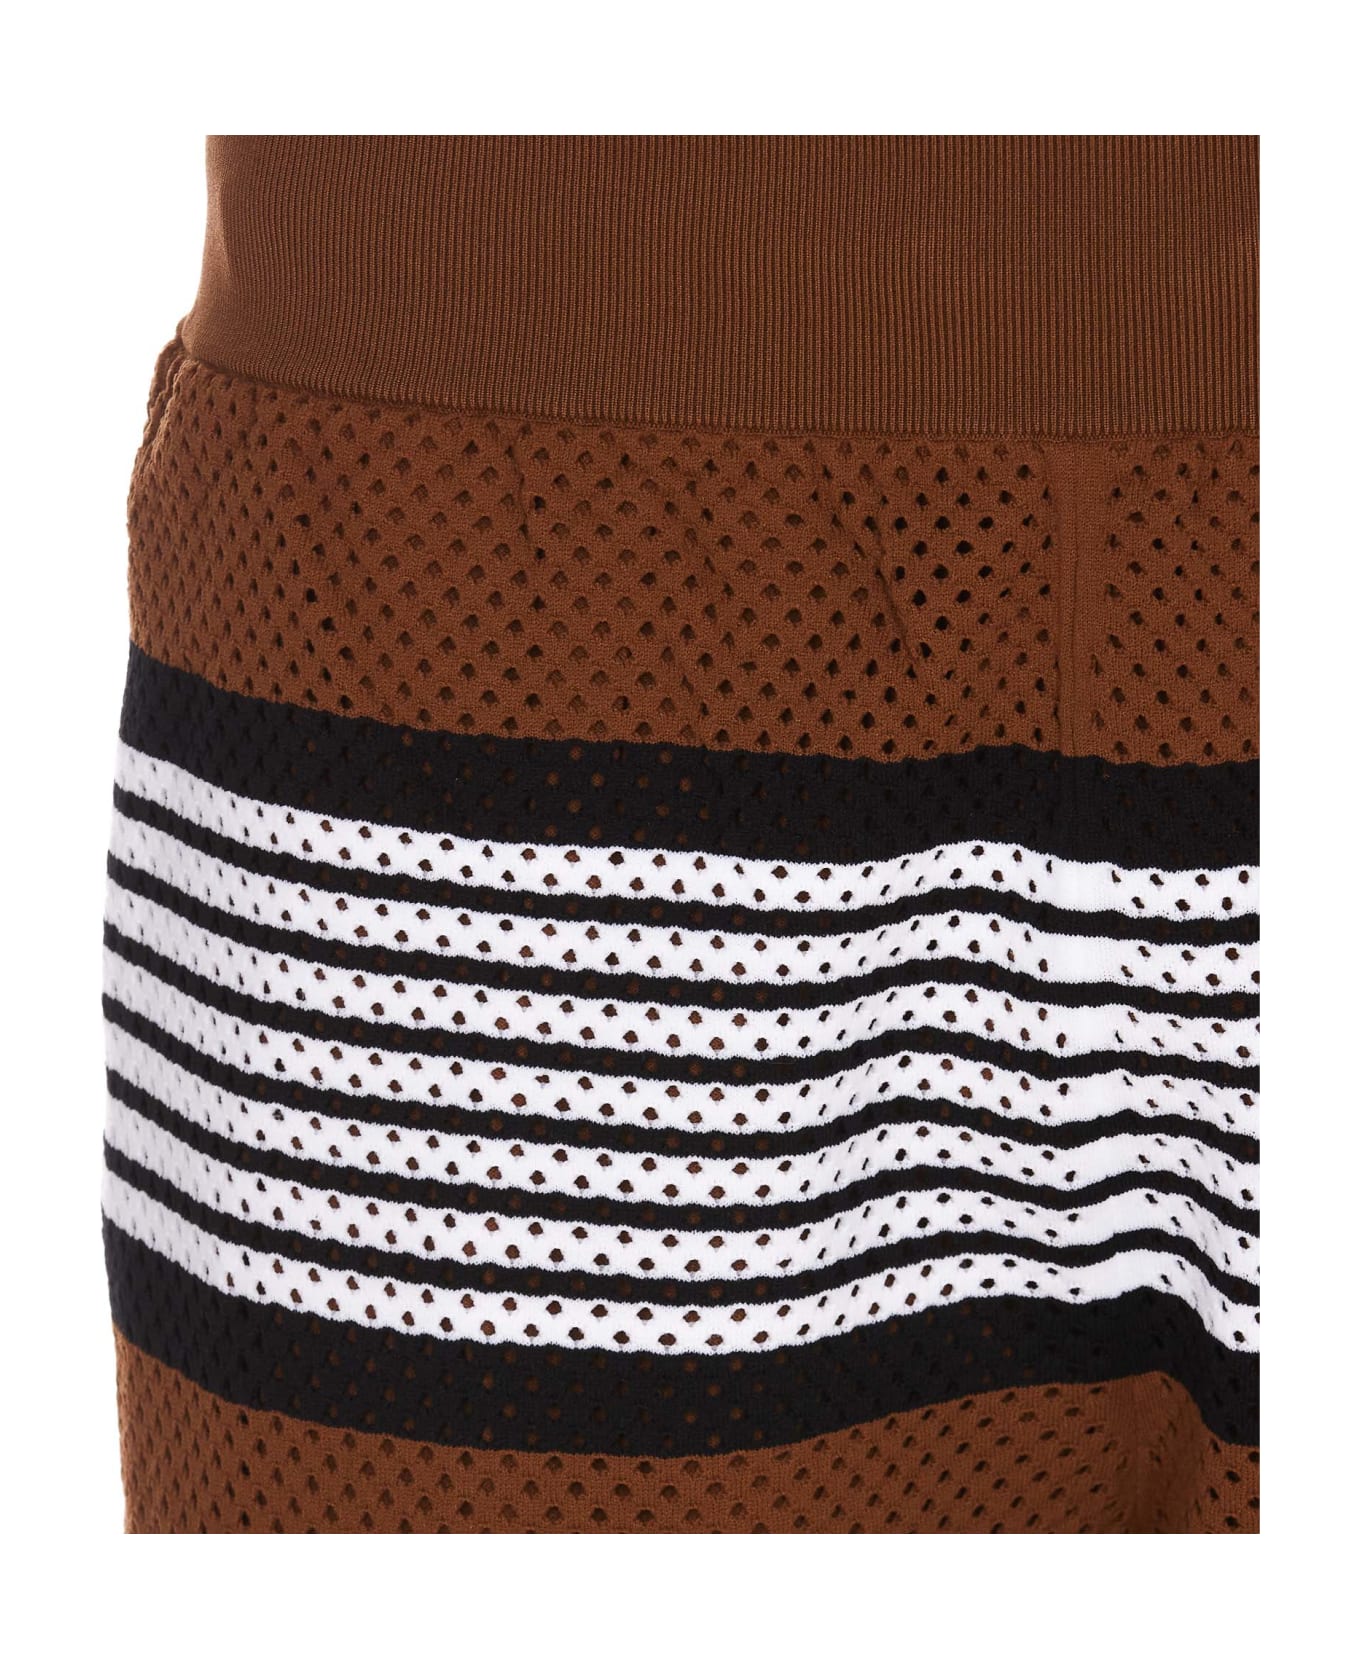 Burberry Stripe Print Shorts - Dark birch brown